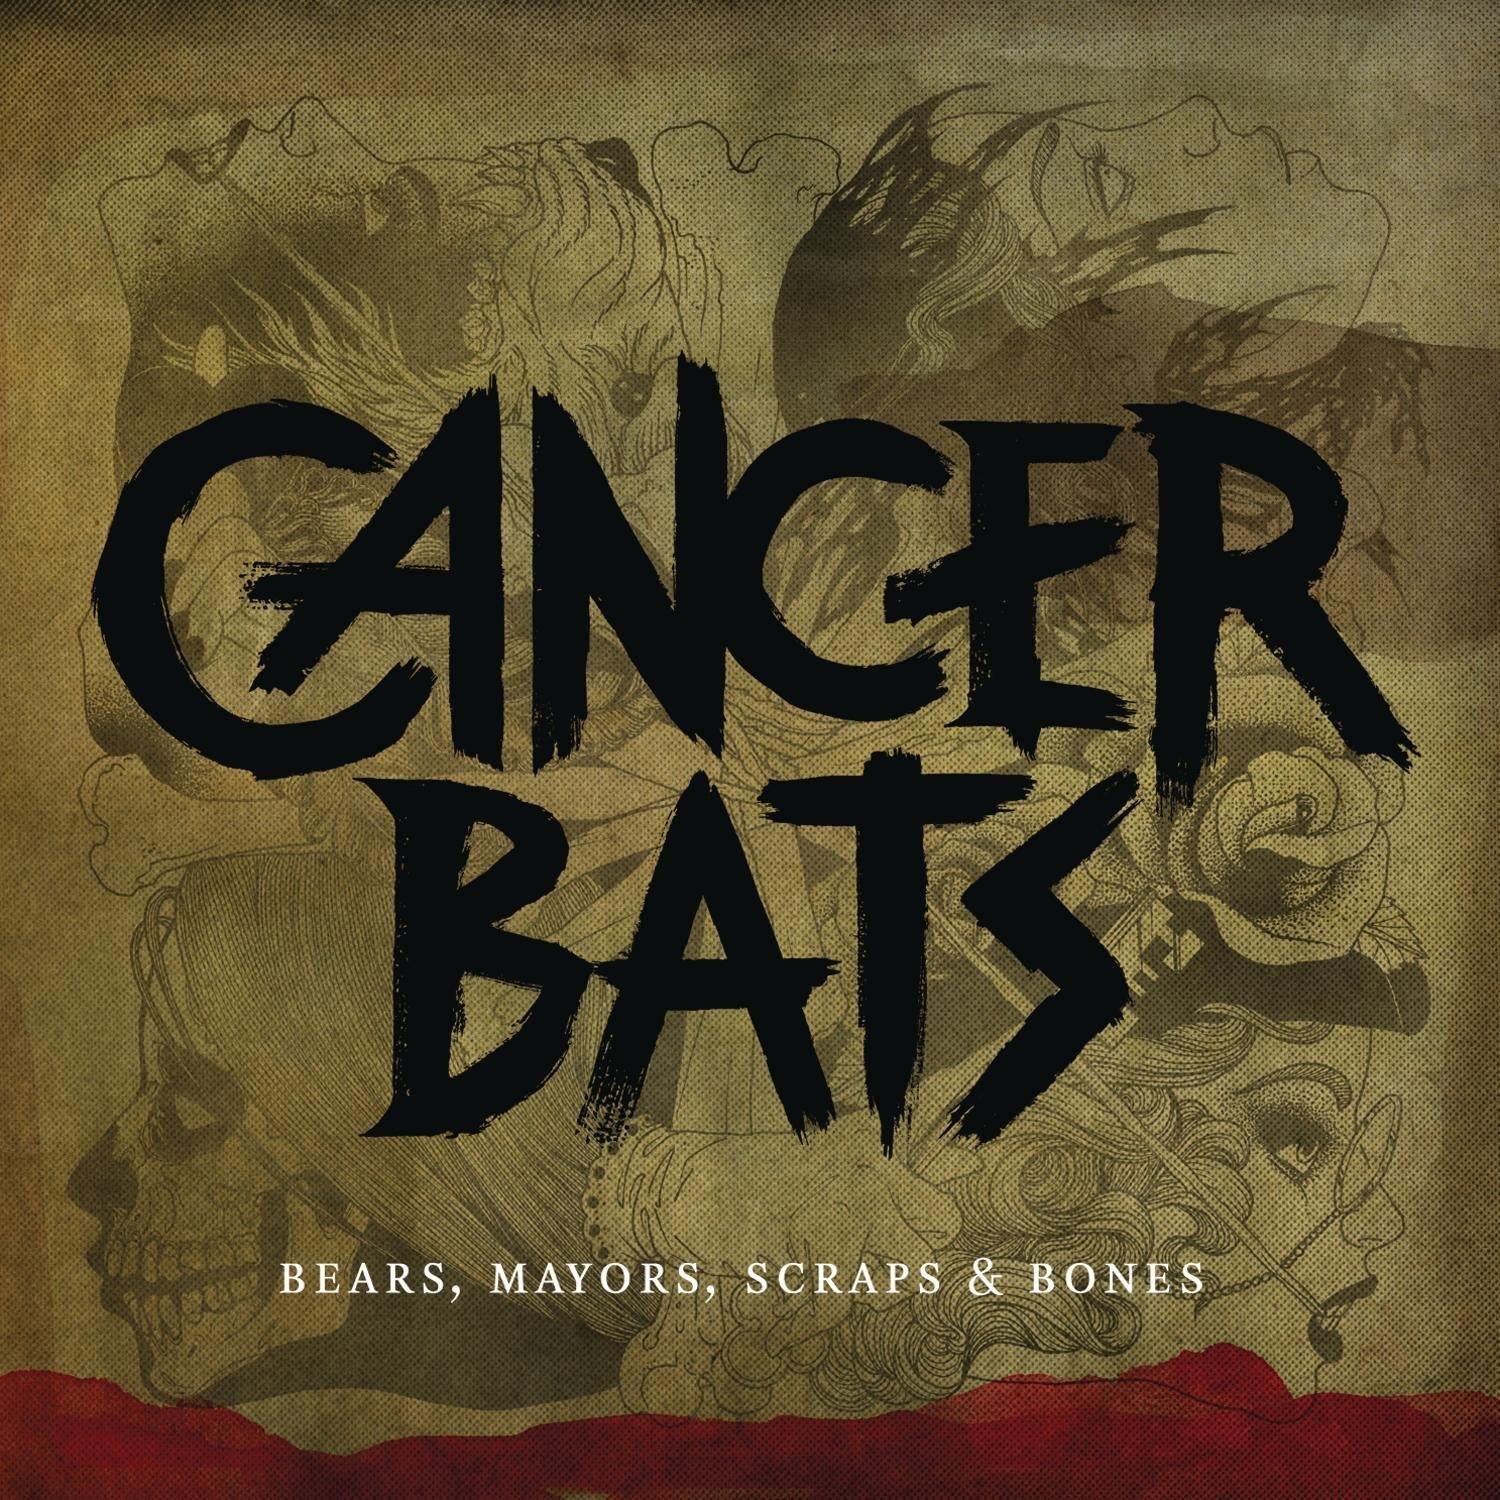 Buy – Cancer Bats "Bears, Mayors, Scraps and Bones" CD – Band & Music Merch – Cold Cuts Merch